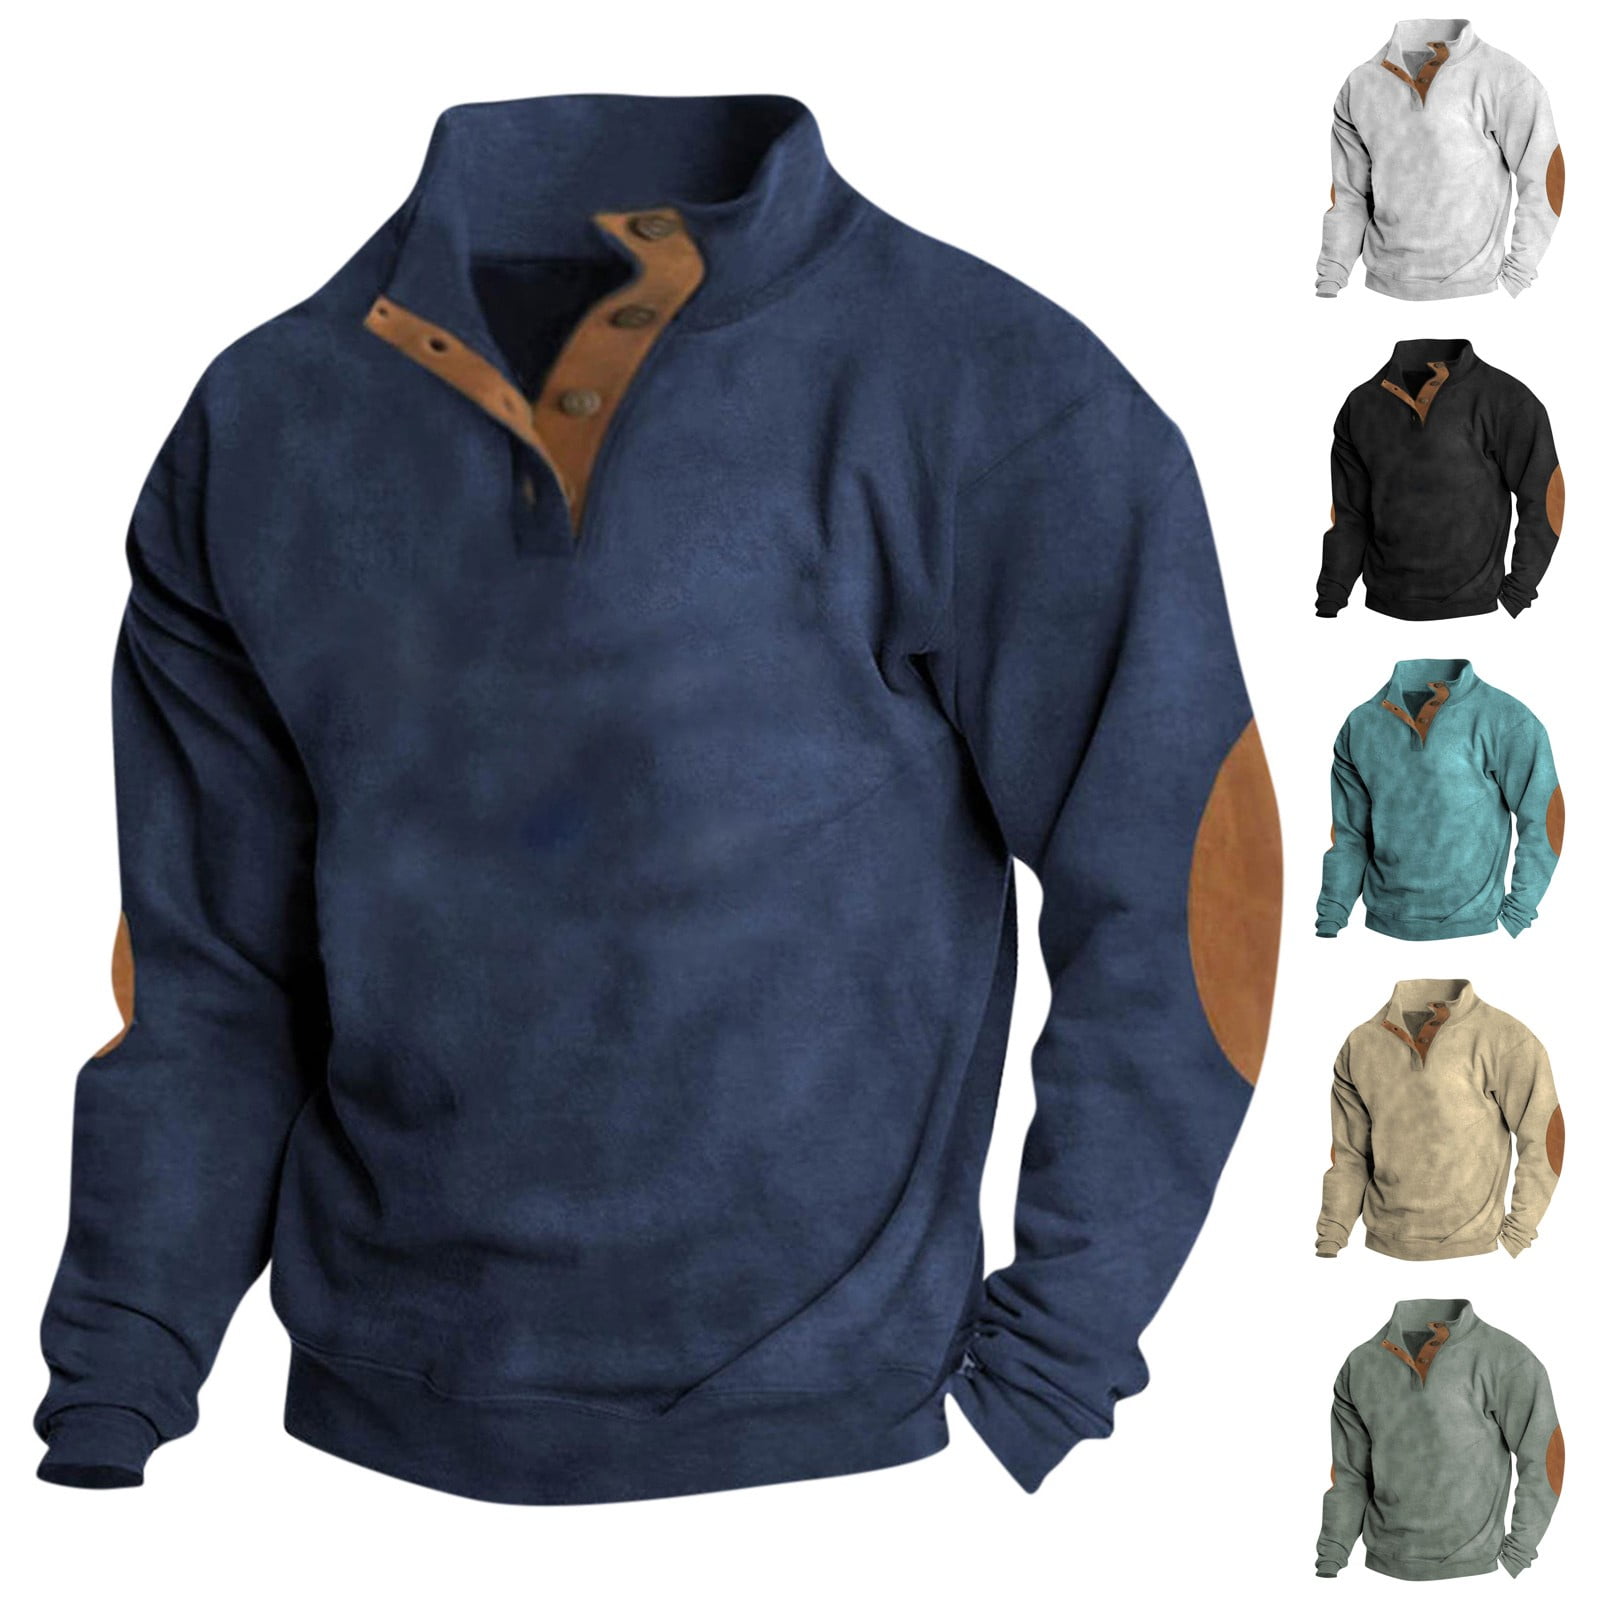 LTTVQM Sweatshirts for Men Corduroy Shirt Solid Color Vintage Top Long ...